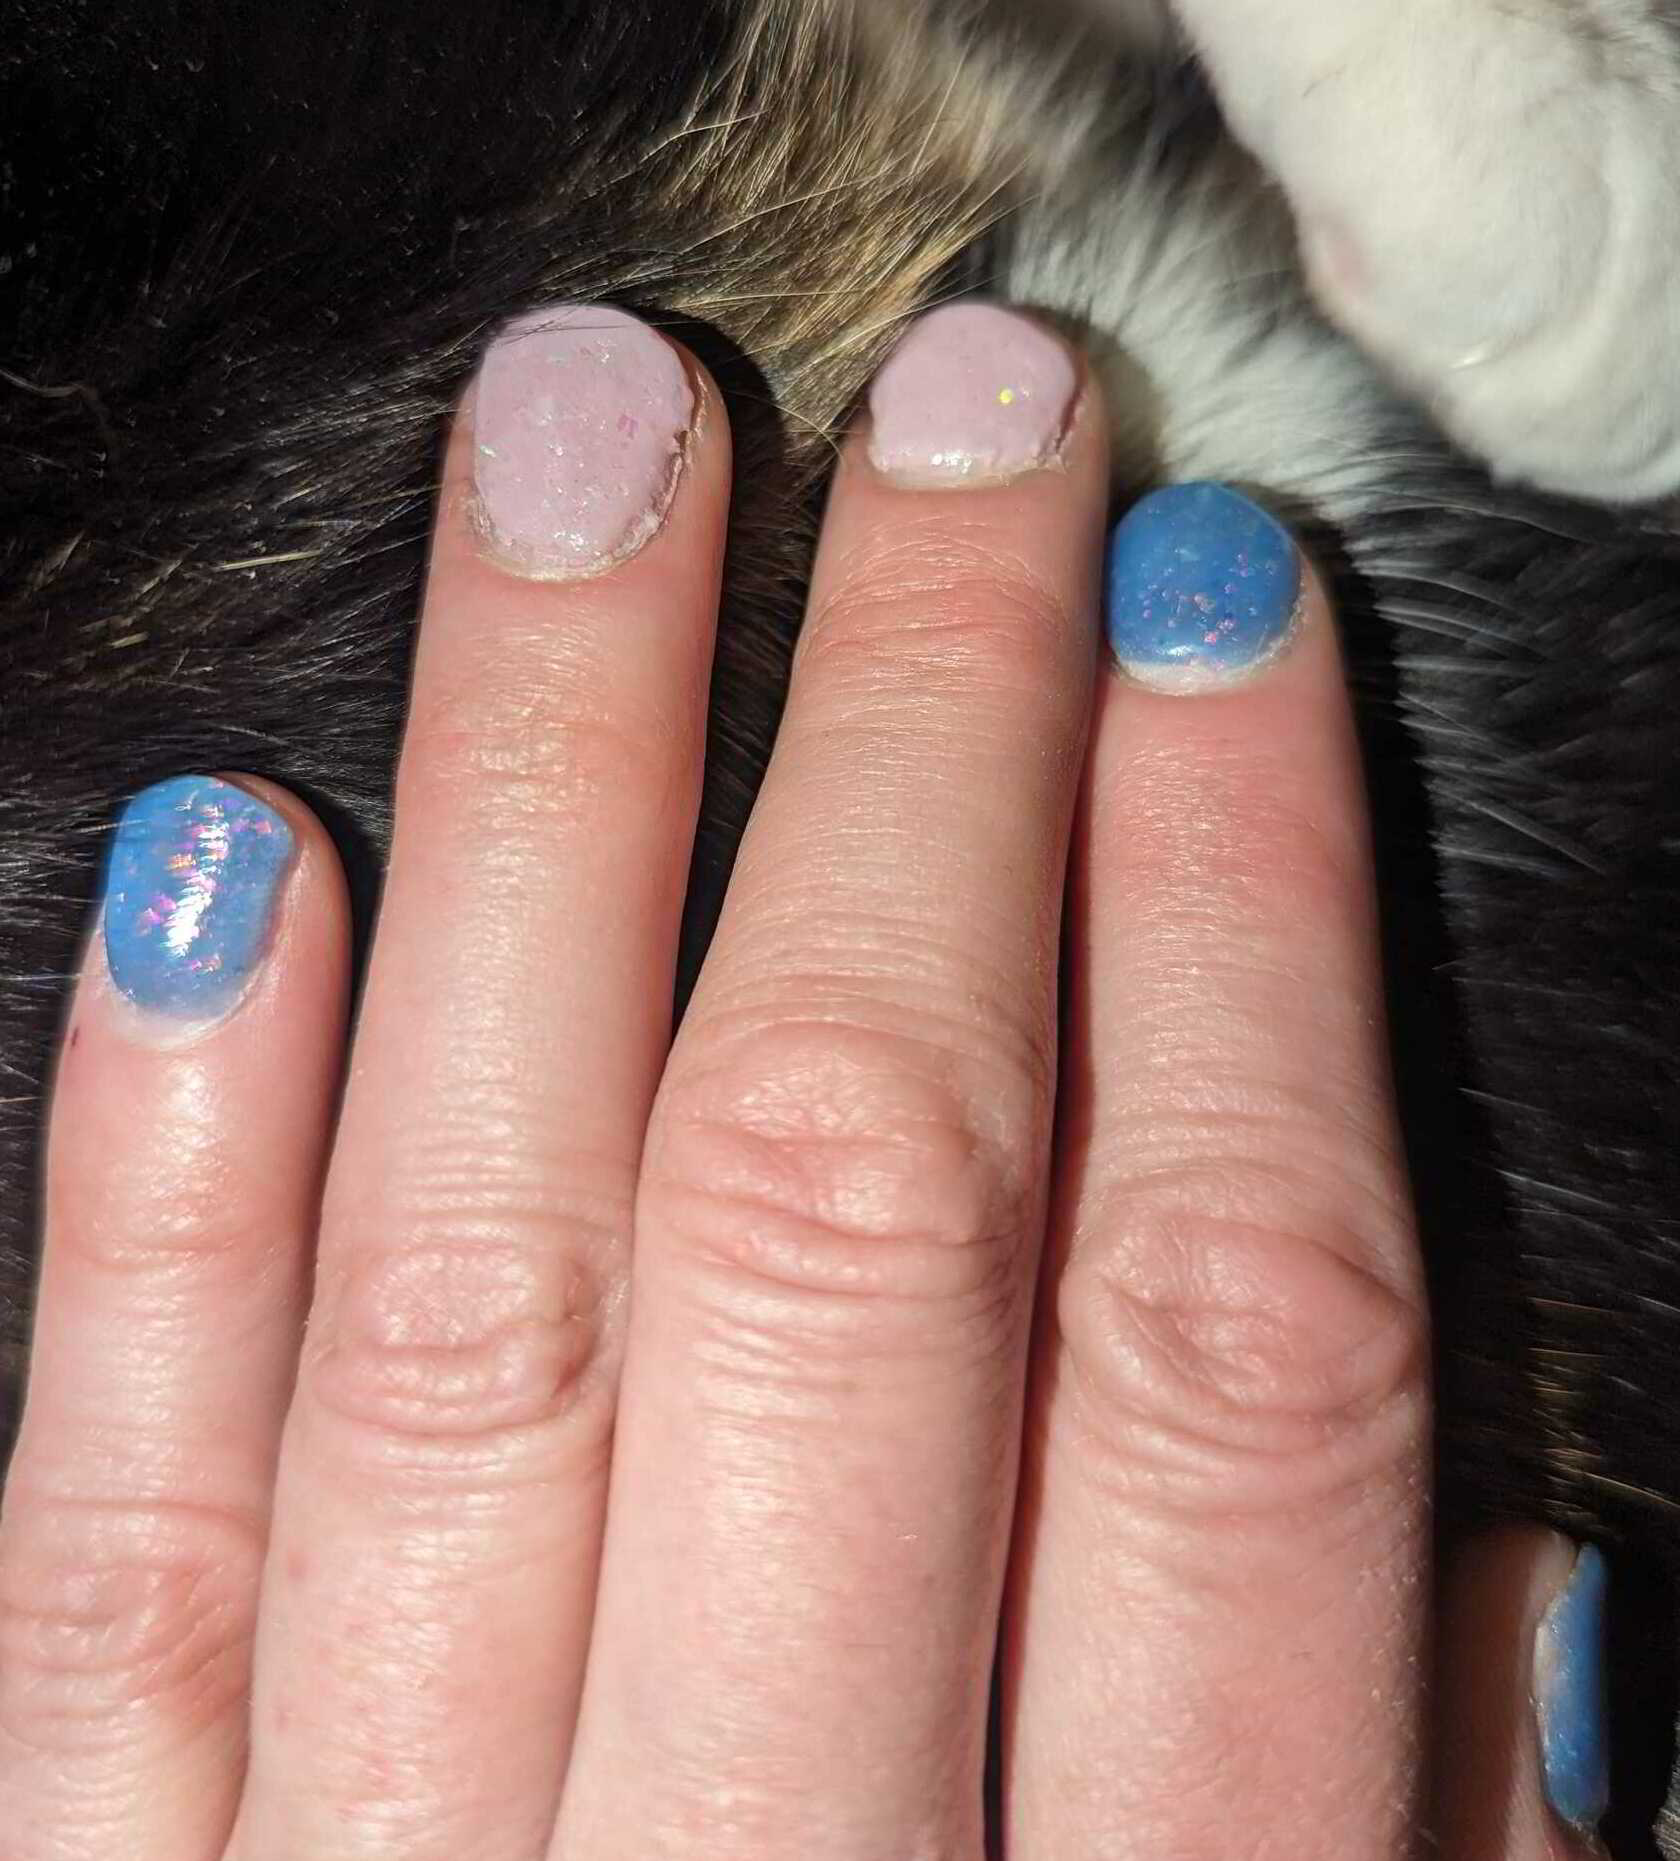 Nail polish manicure of shade Revel Sagittarius, Revel Gemini